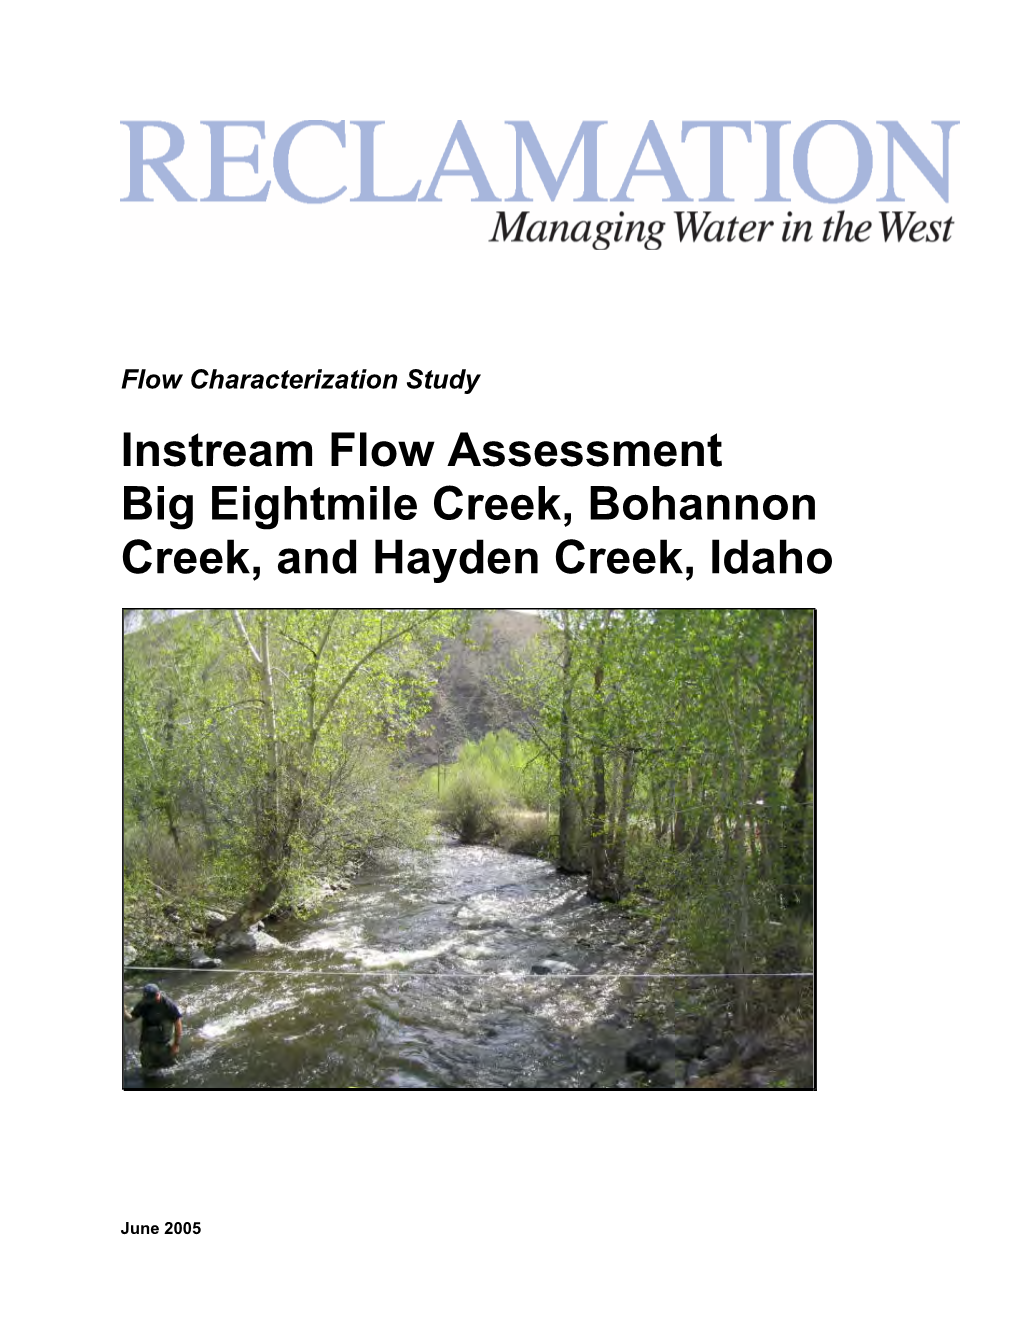 Instream Flow Assessment: Big Eightmile Creek, Bohannon Creek